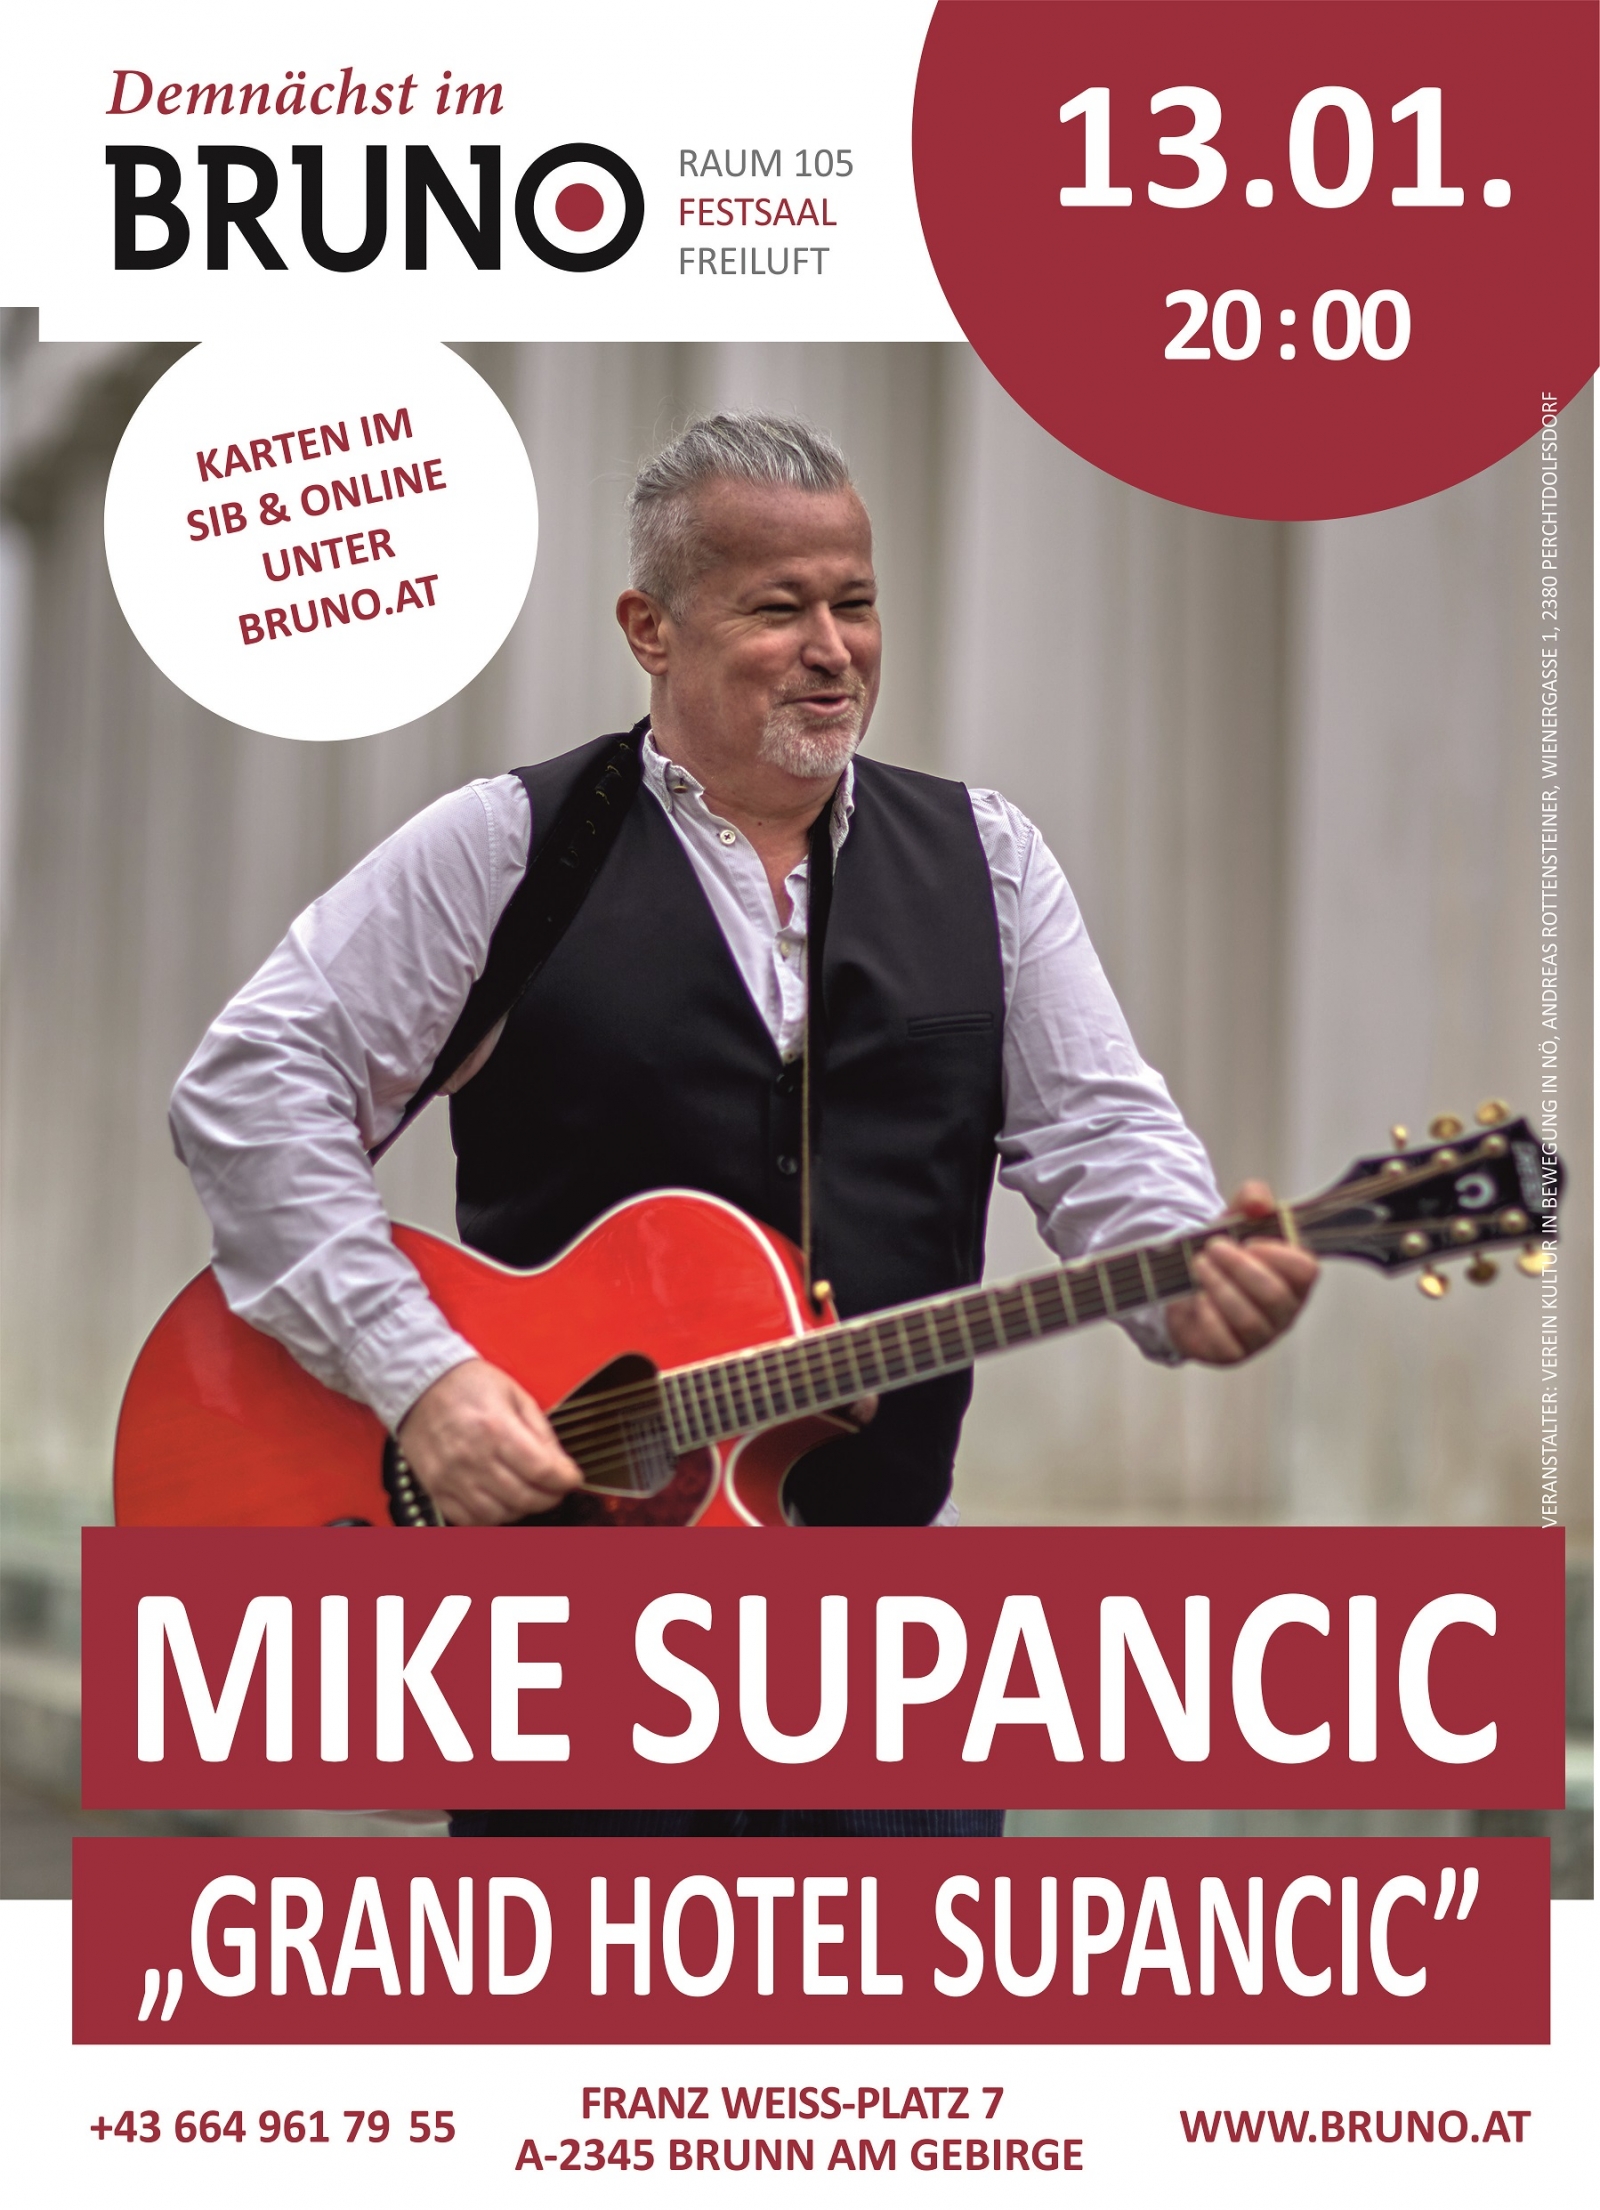 Mike Supancic - Grand Hotel Supancic